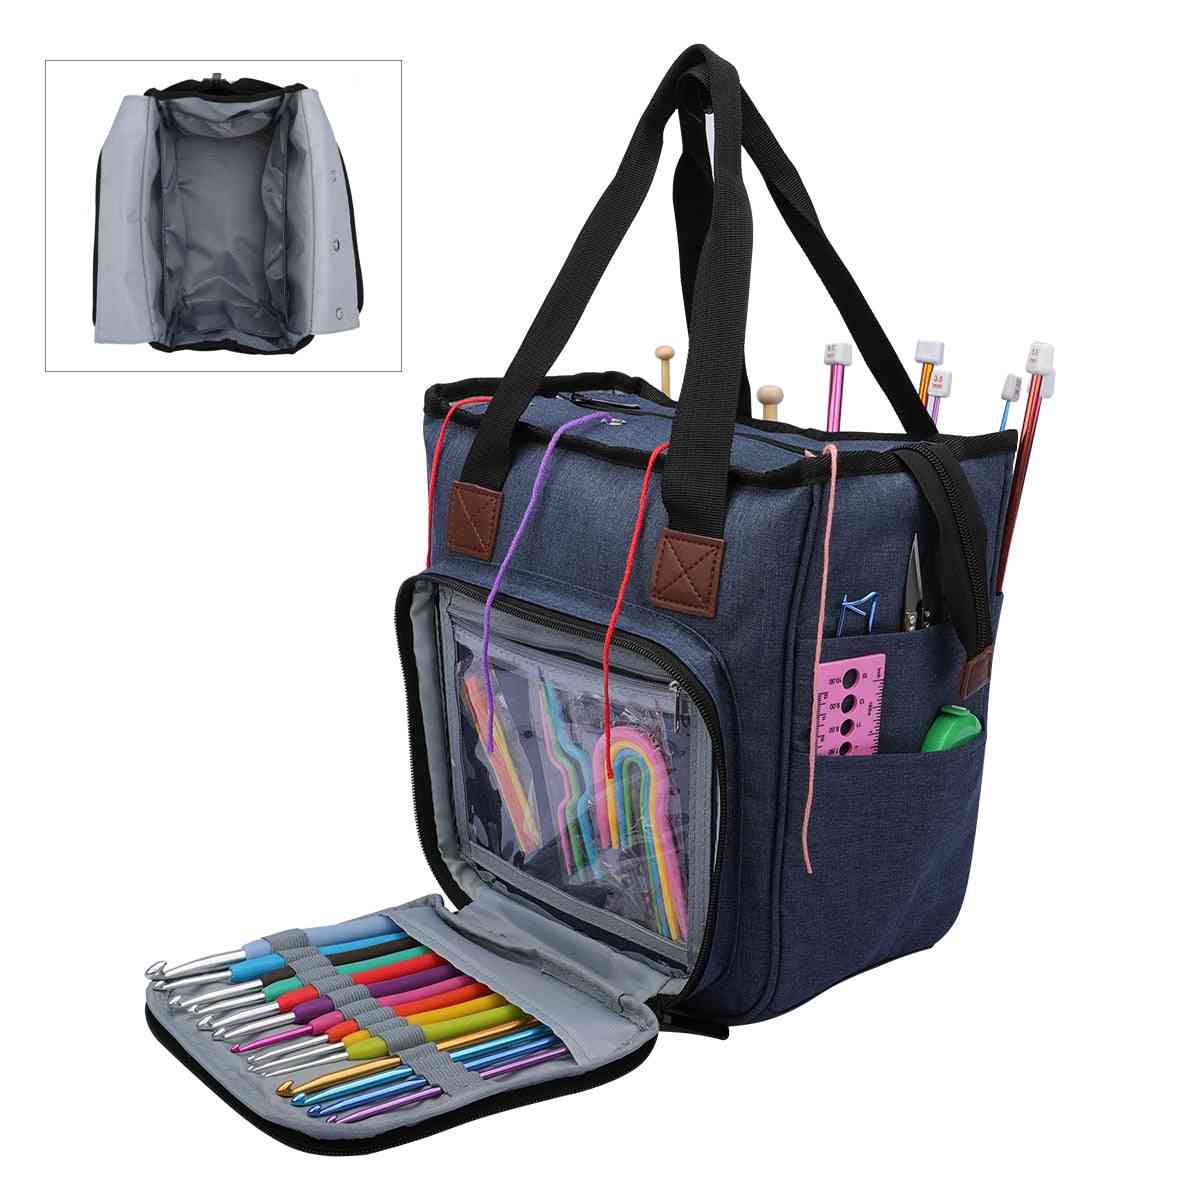 Portable Yarn Tote Storage Bag For Wool Crochet Hooks Knitting Needles Sewing Supplies Set - Diy Household Organizer Bag